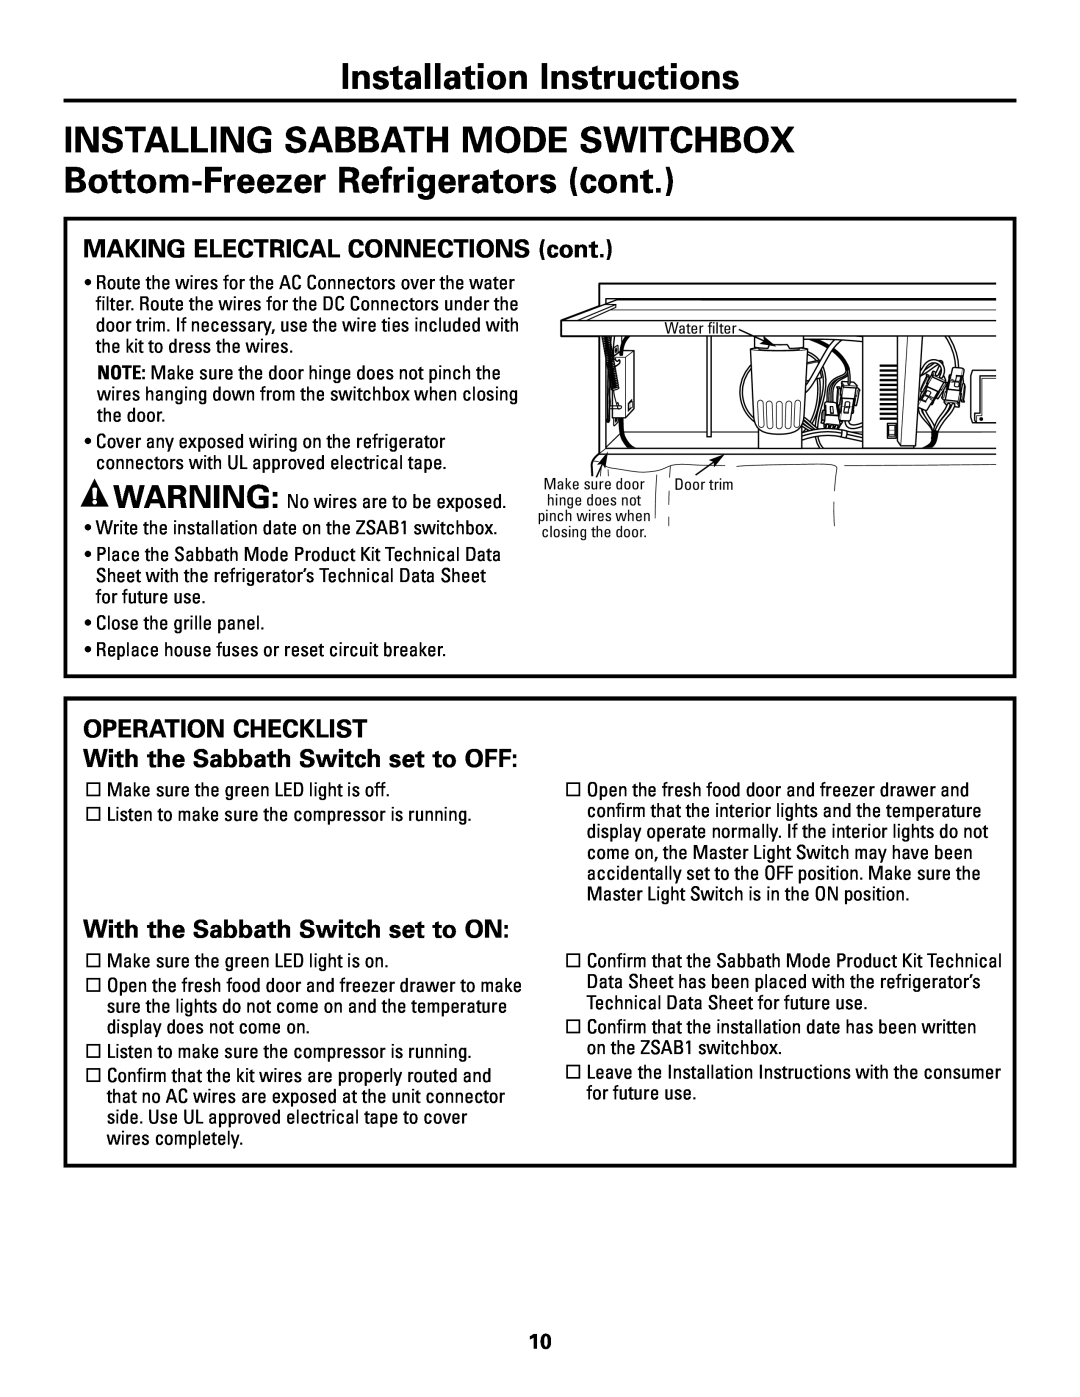 GE Monogram ZSAB1 INSTALLING SABBATH MODE SWITCHBOX Bottom-Freezer Refrigerators cont, Installation Instructions 